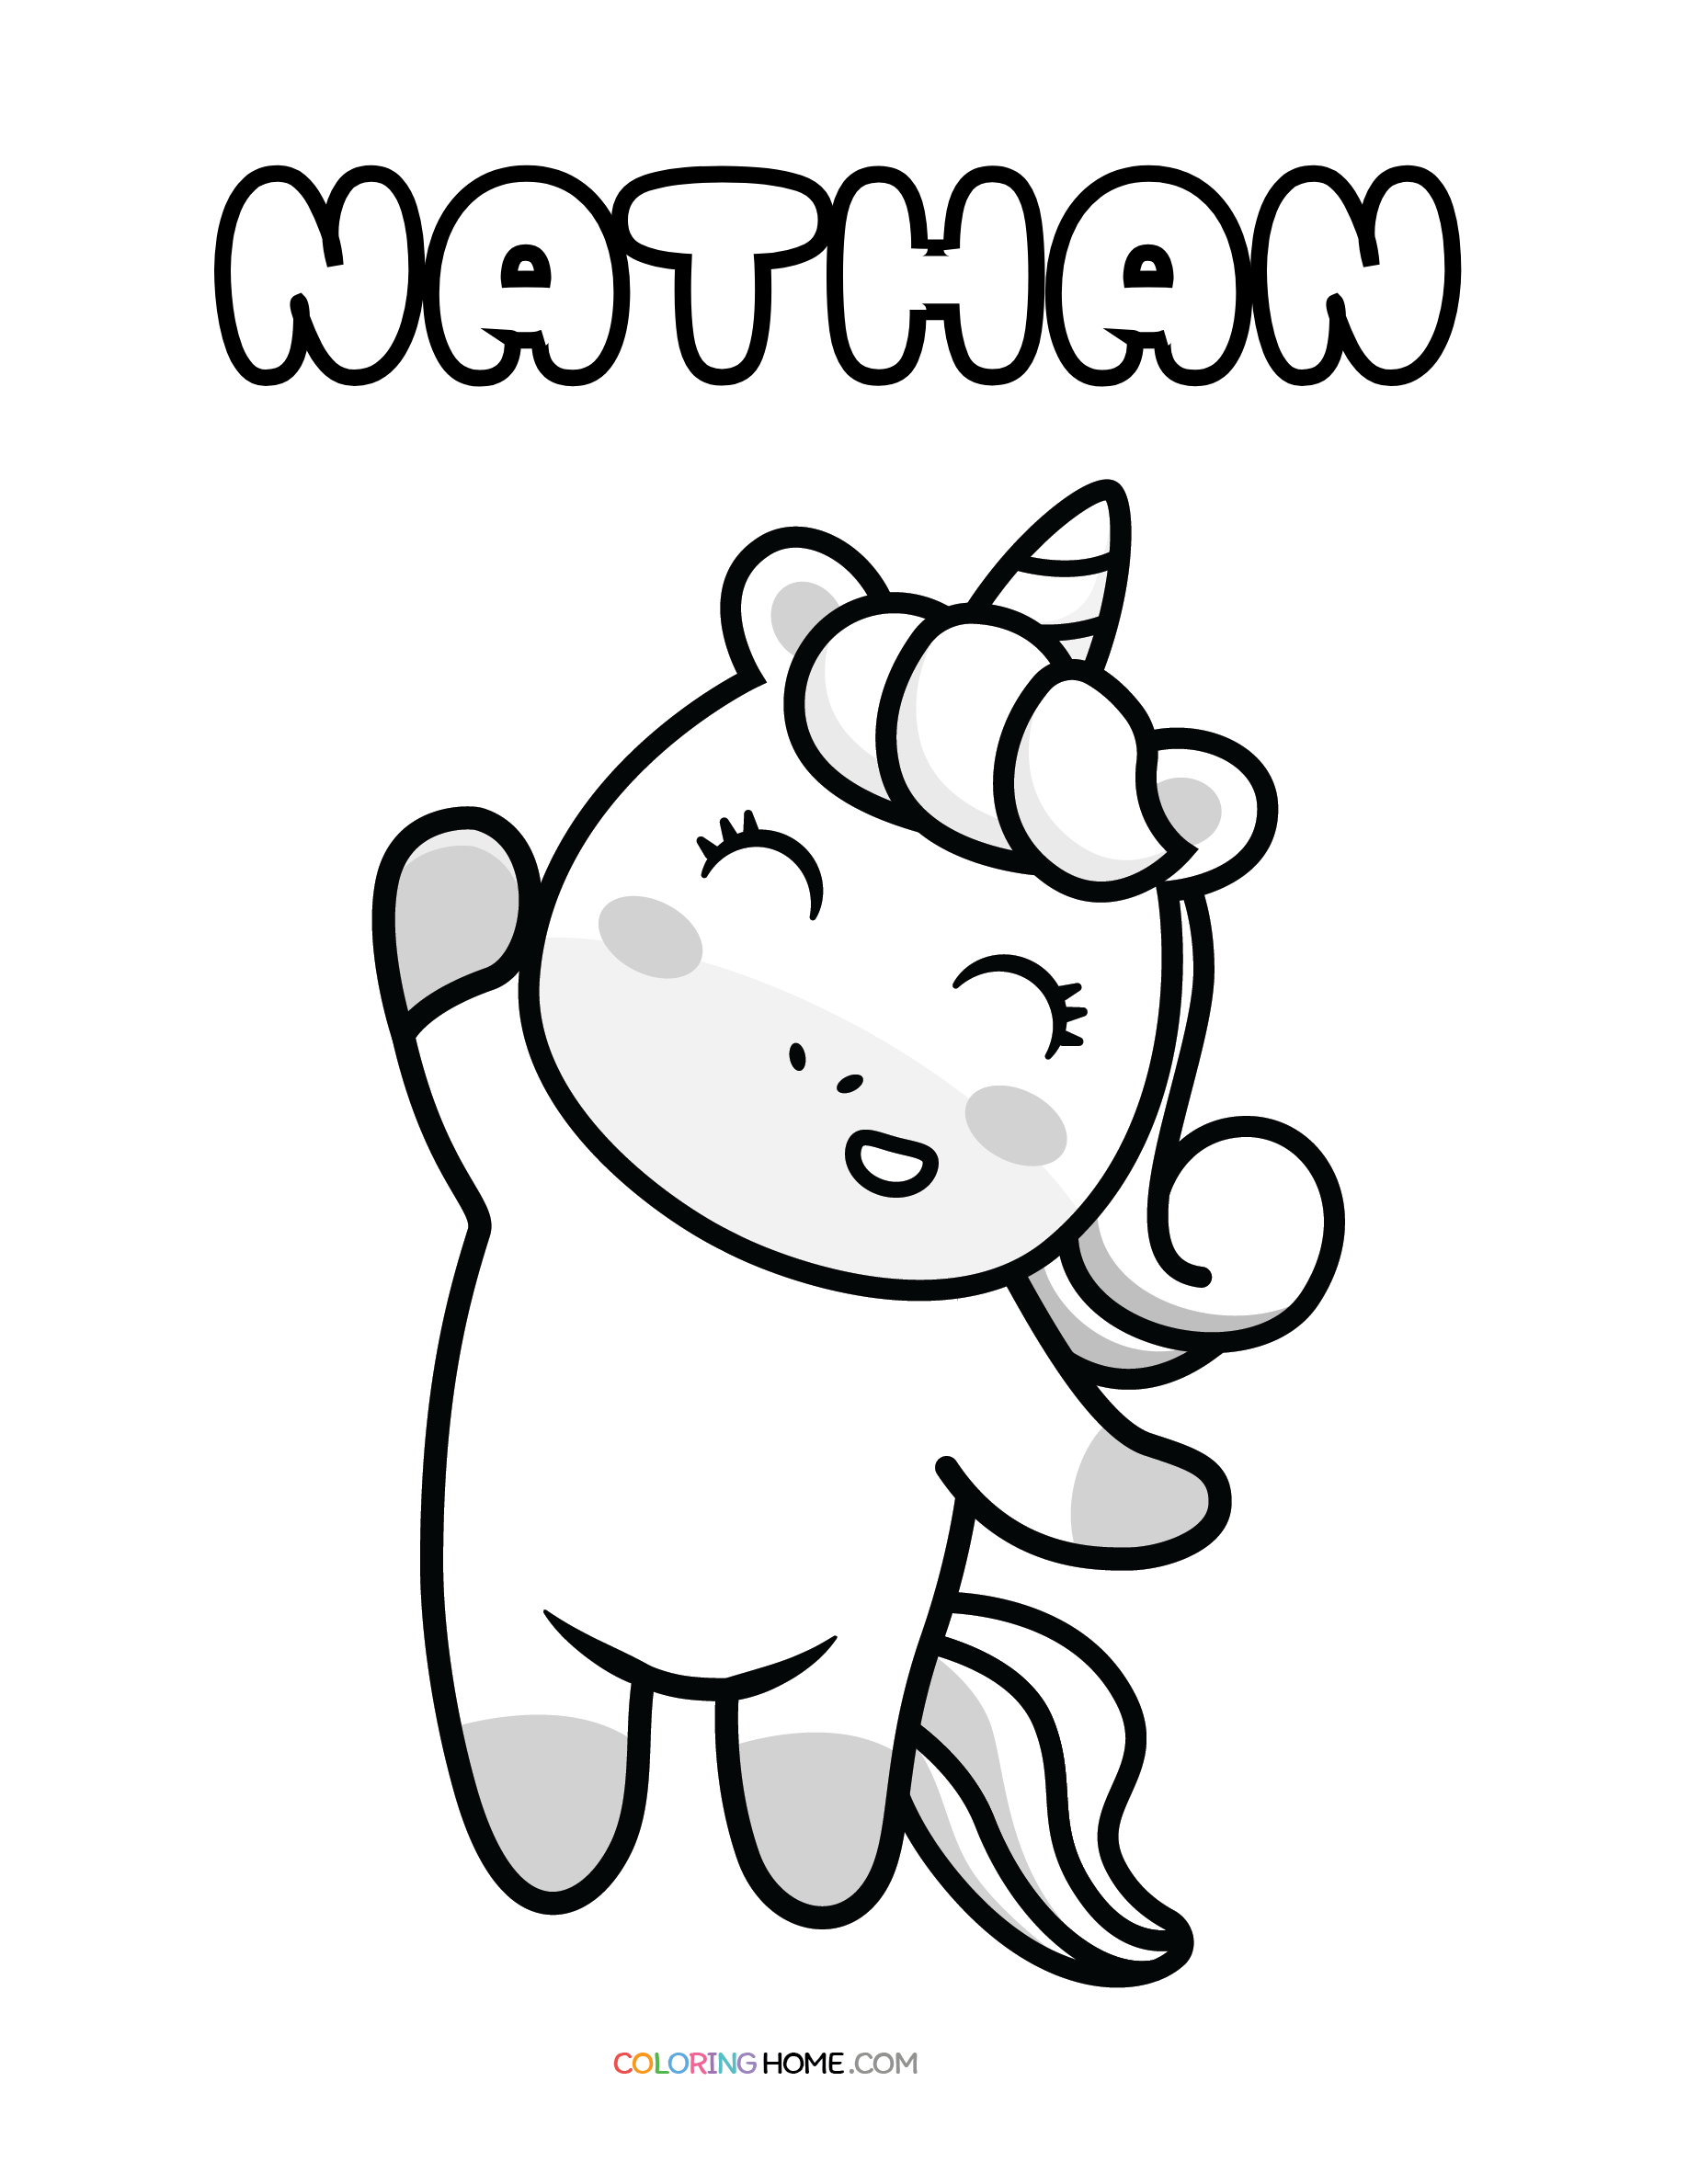 Nathan unicorn coloring page